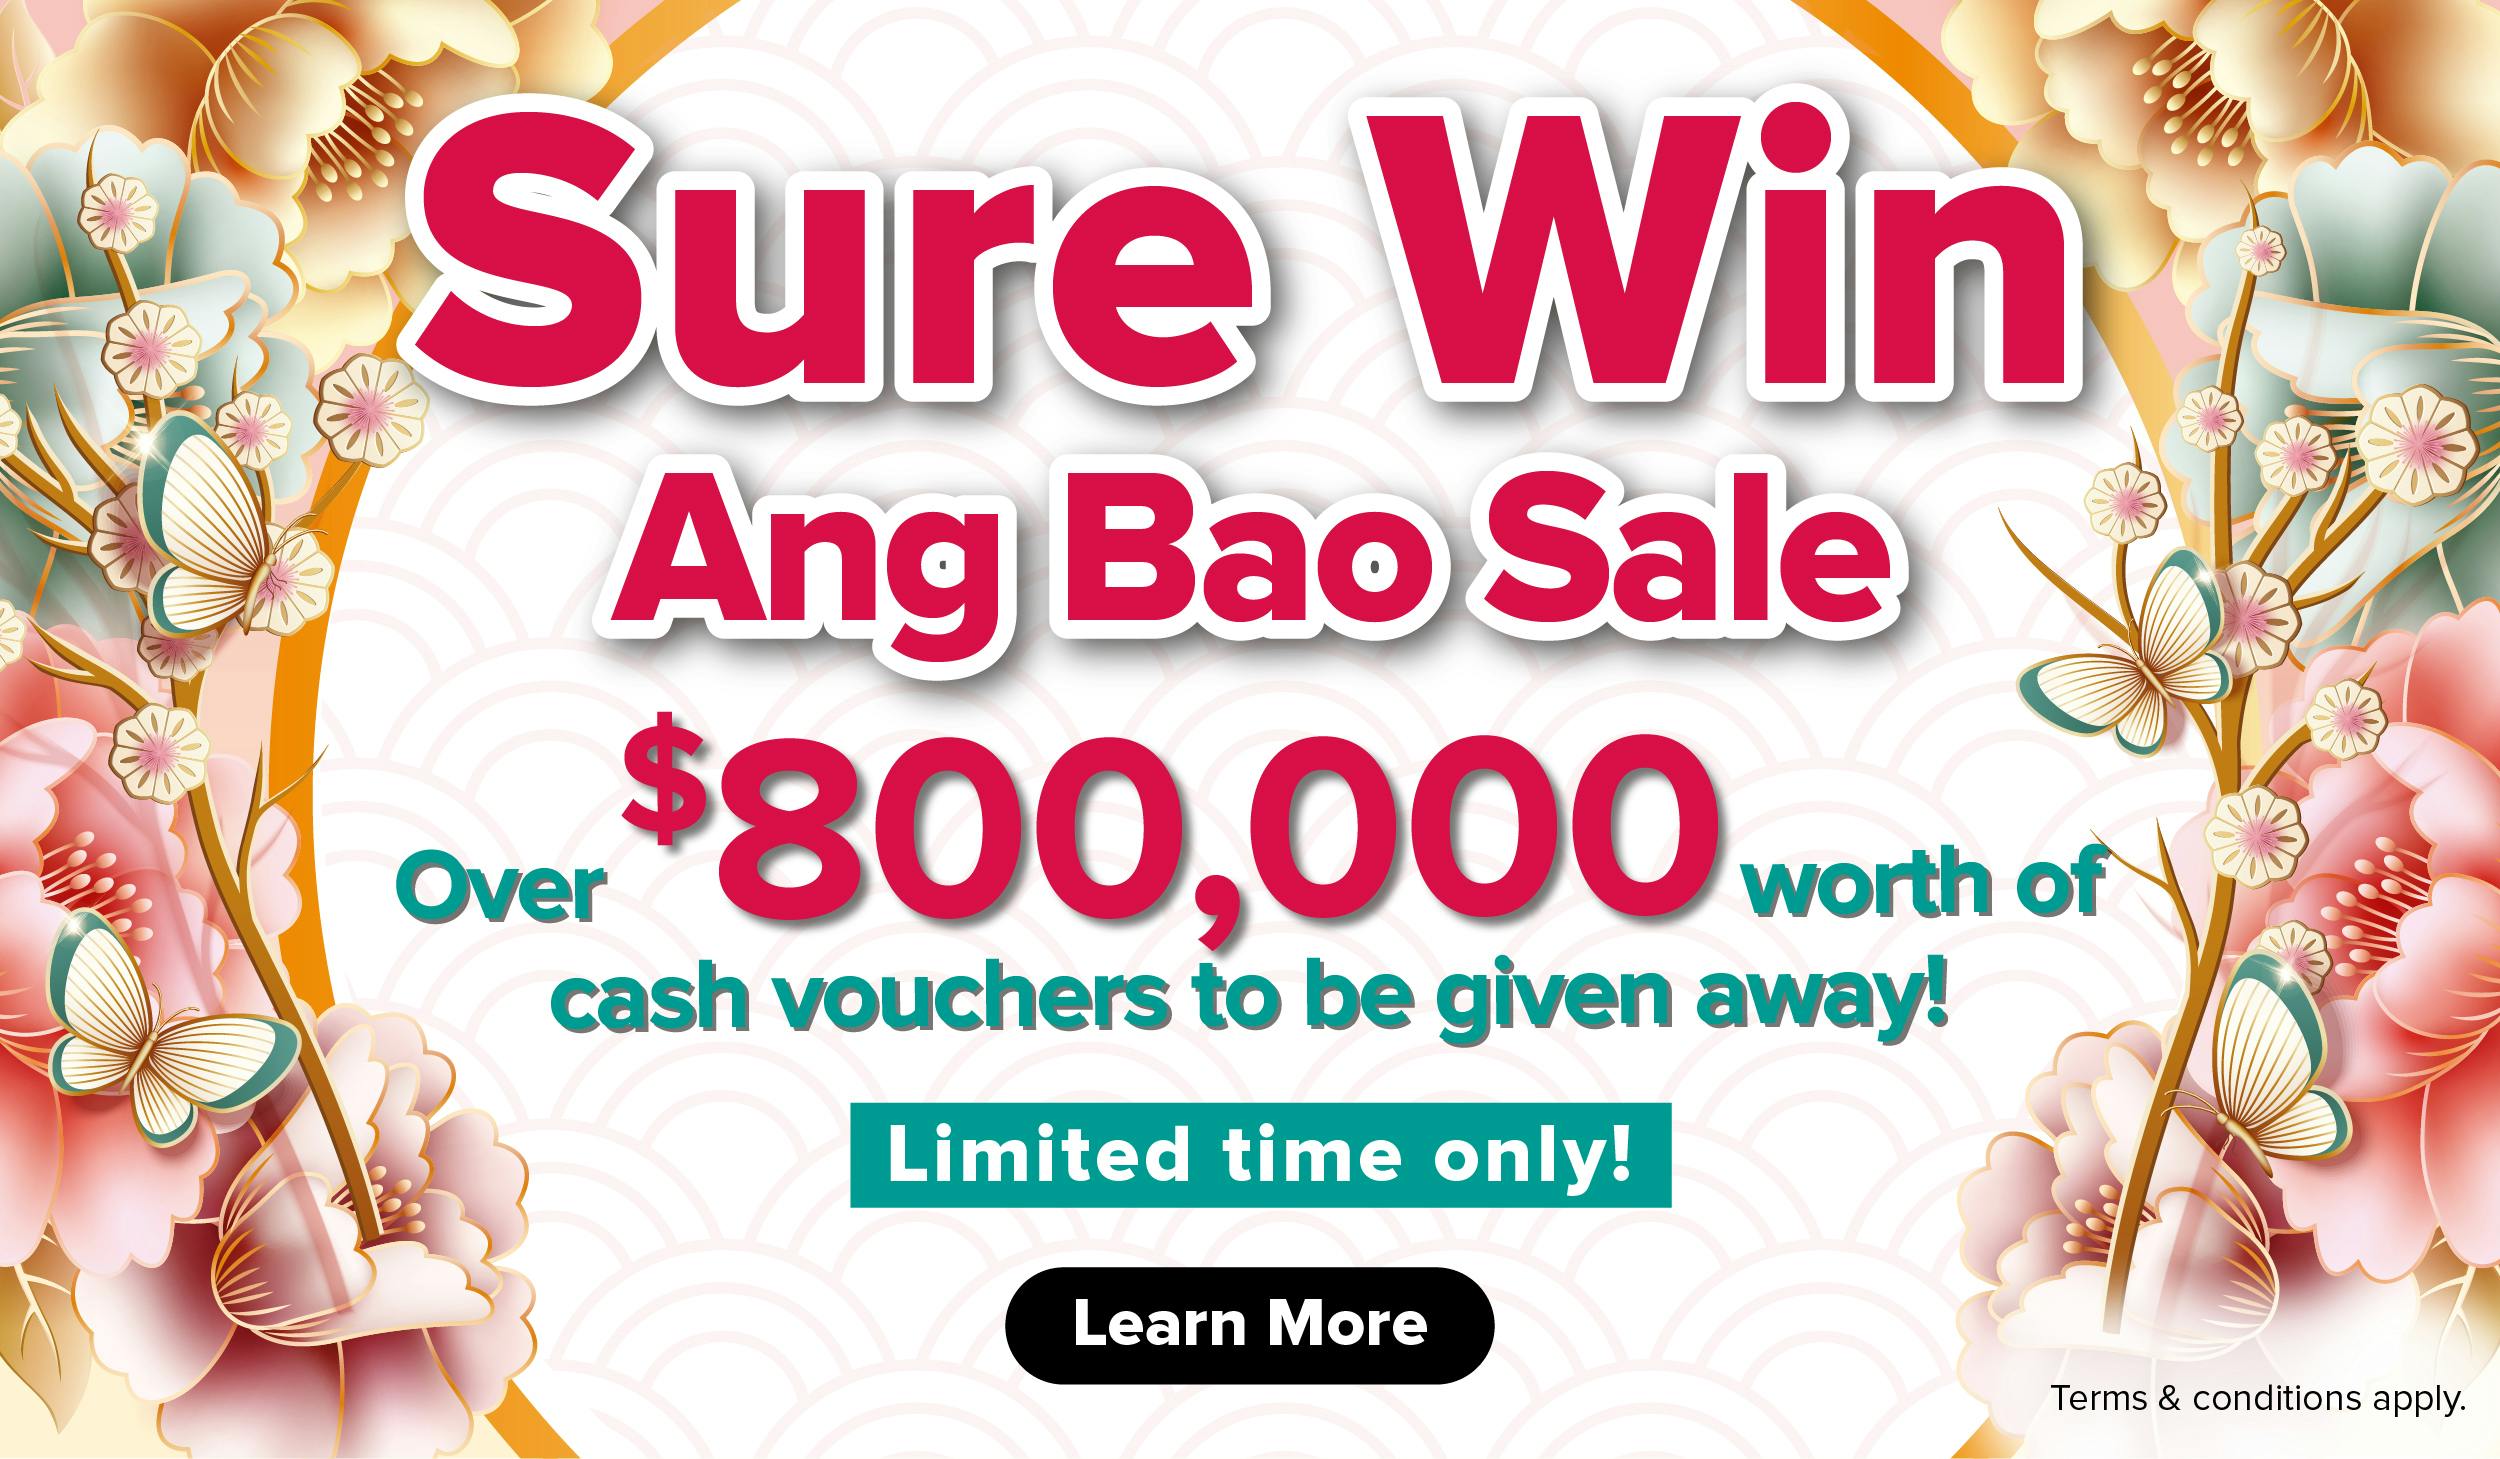 Sure Win Ang Bao Sale (6 to 19 Jan 2022) - Promo Banner